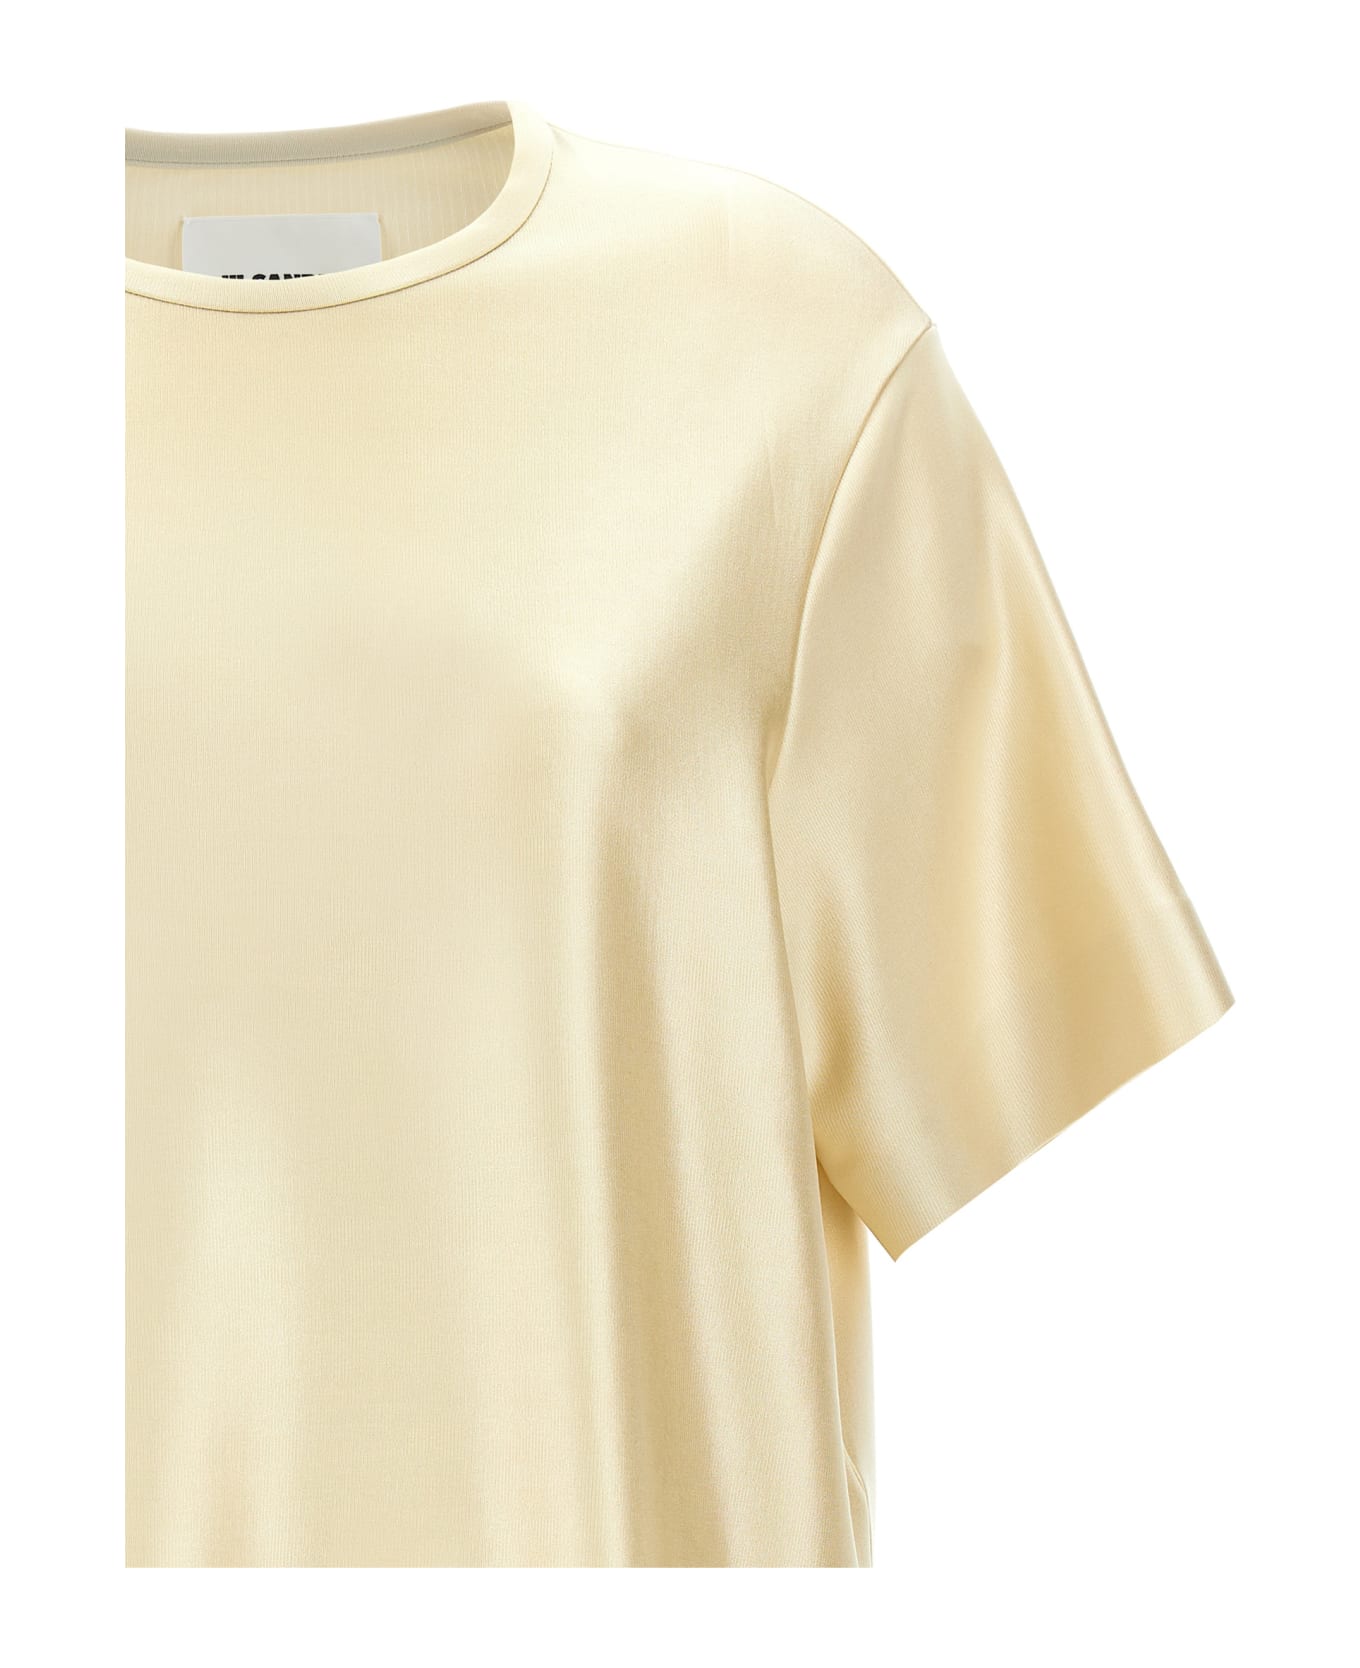 Jil Sander Laminated T-shirt - Gold Tシャツ